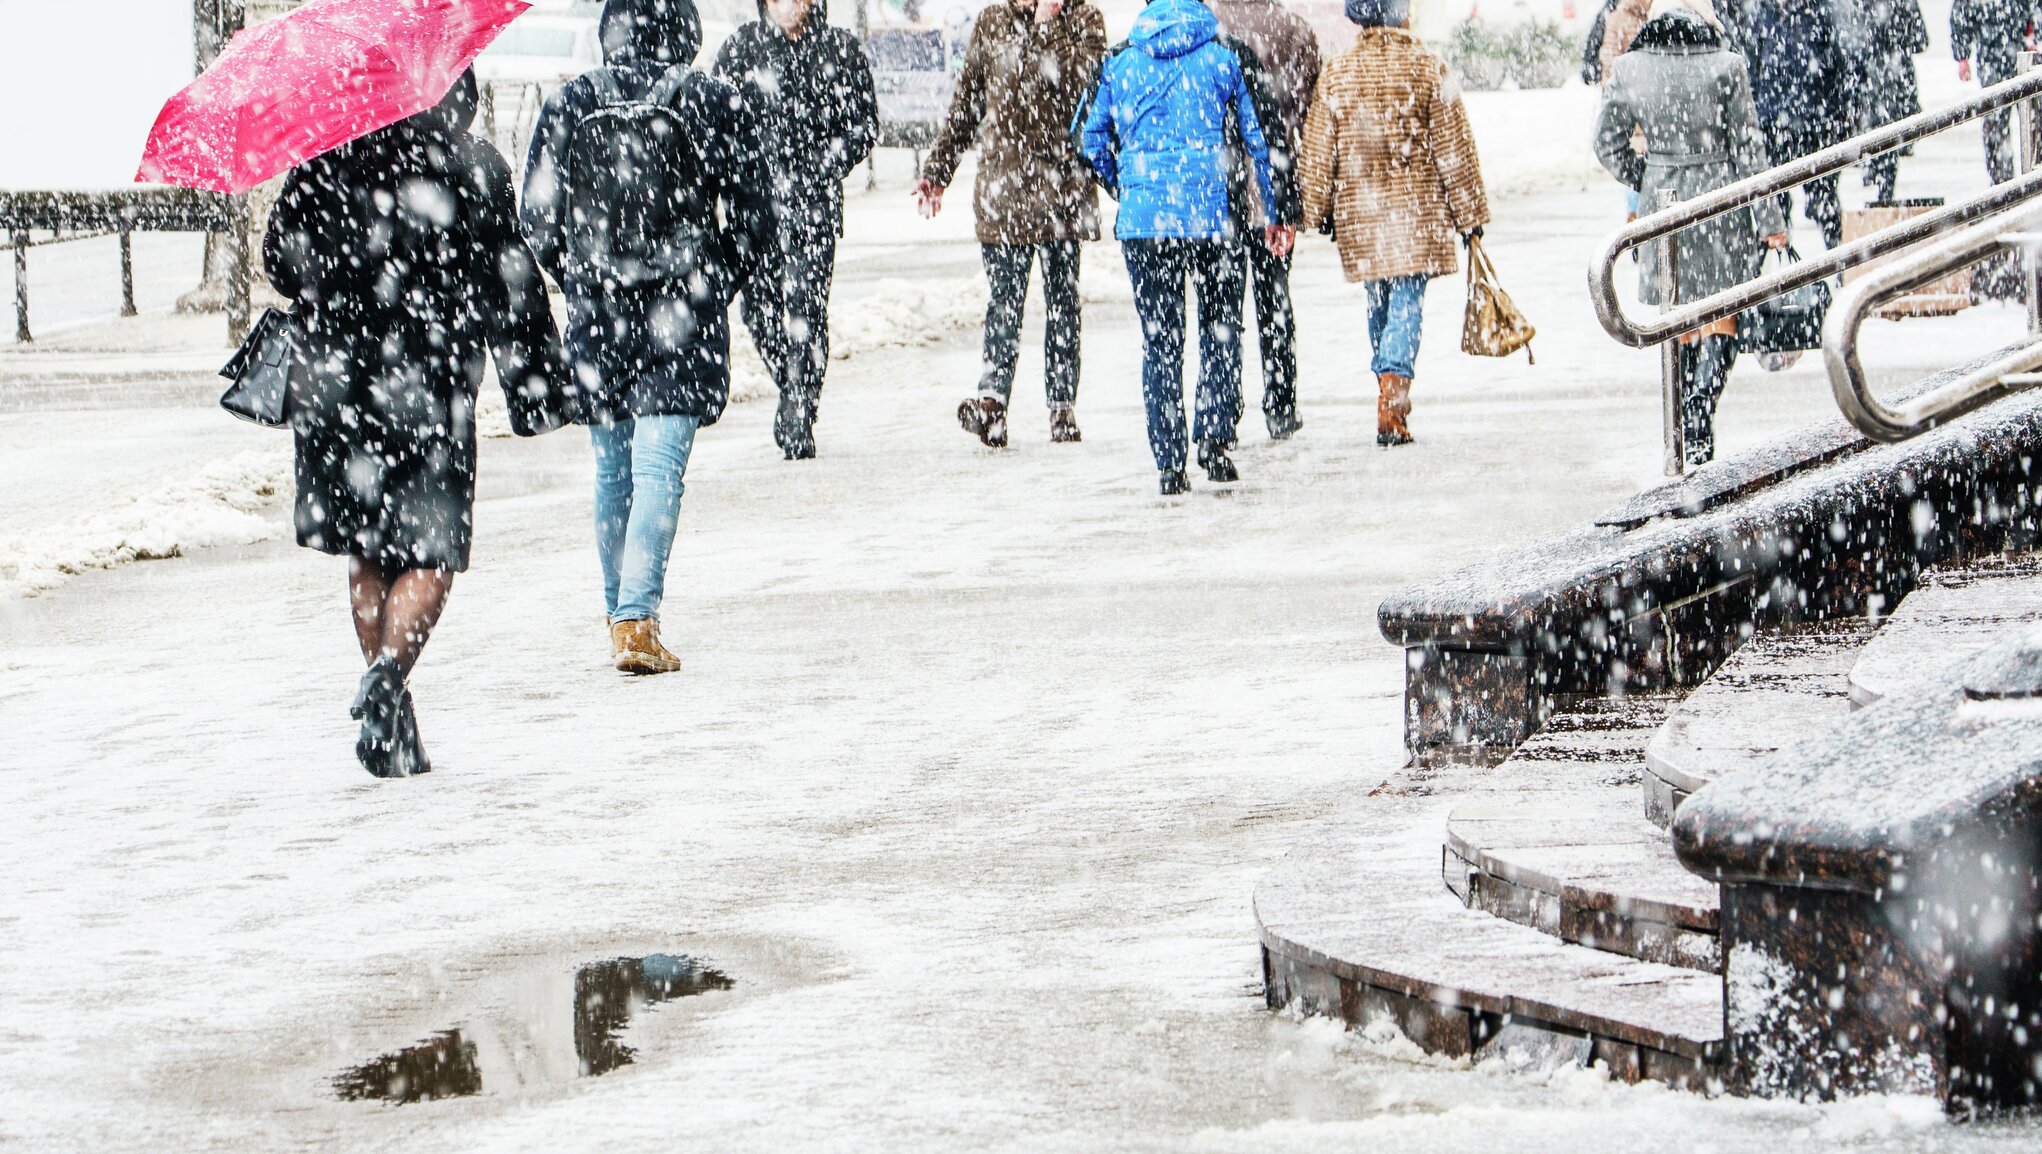 people walking in a snowy pavement.